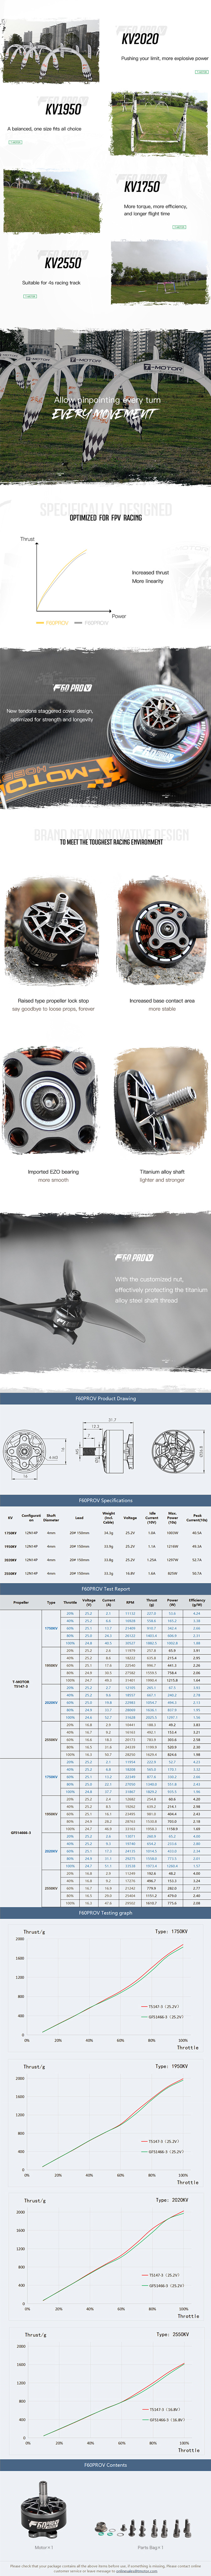 BEST DRONE RACING MOTORS ??!!?  Tmotor F60 V lv 2020kv review